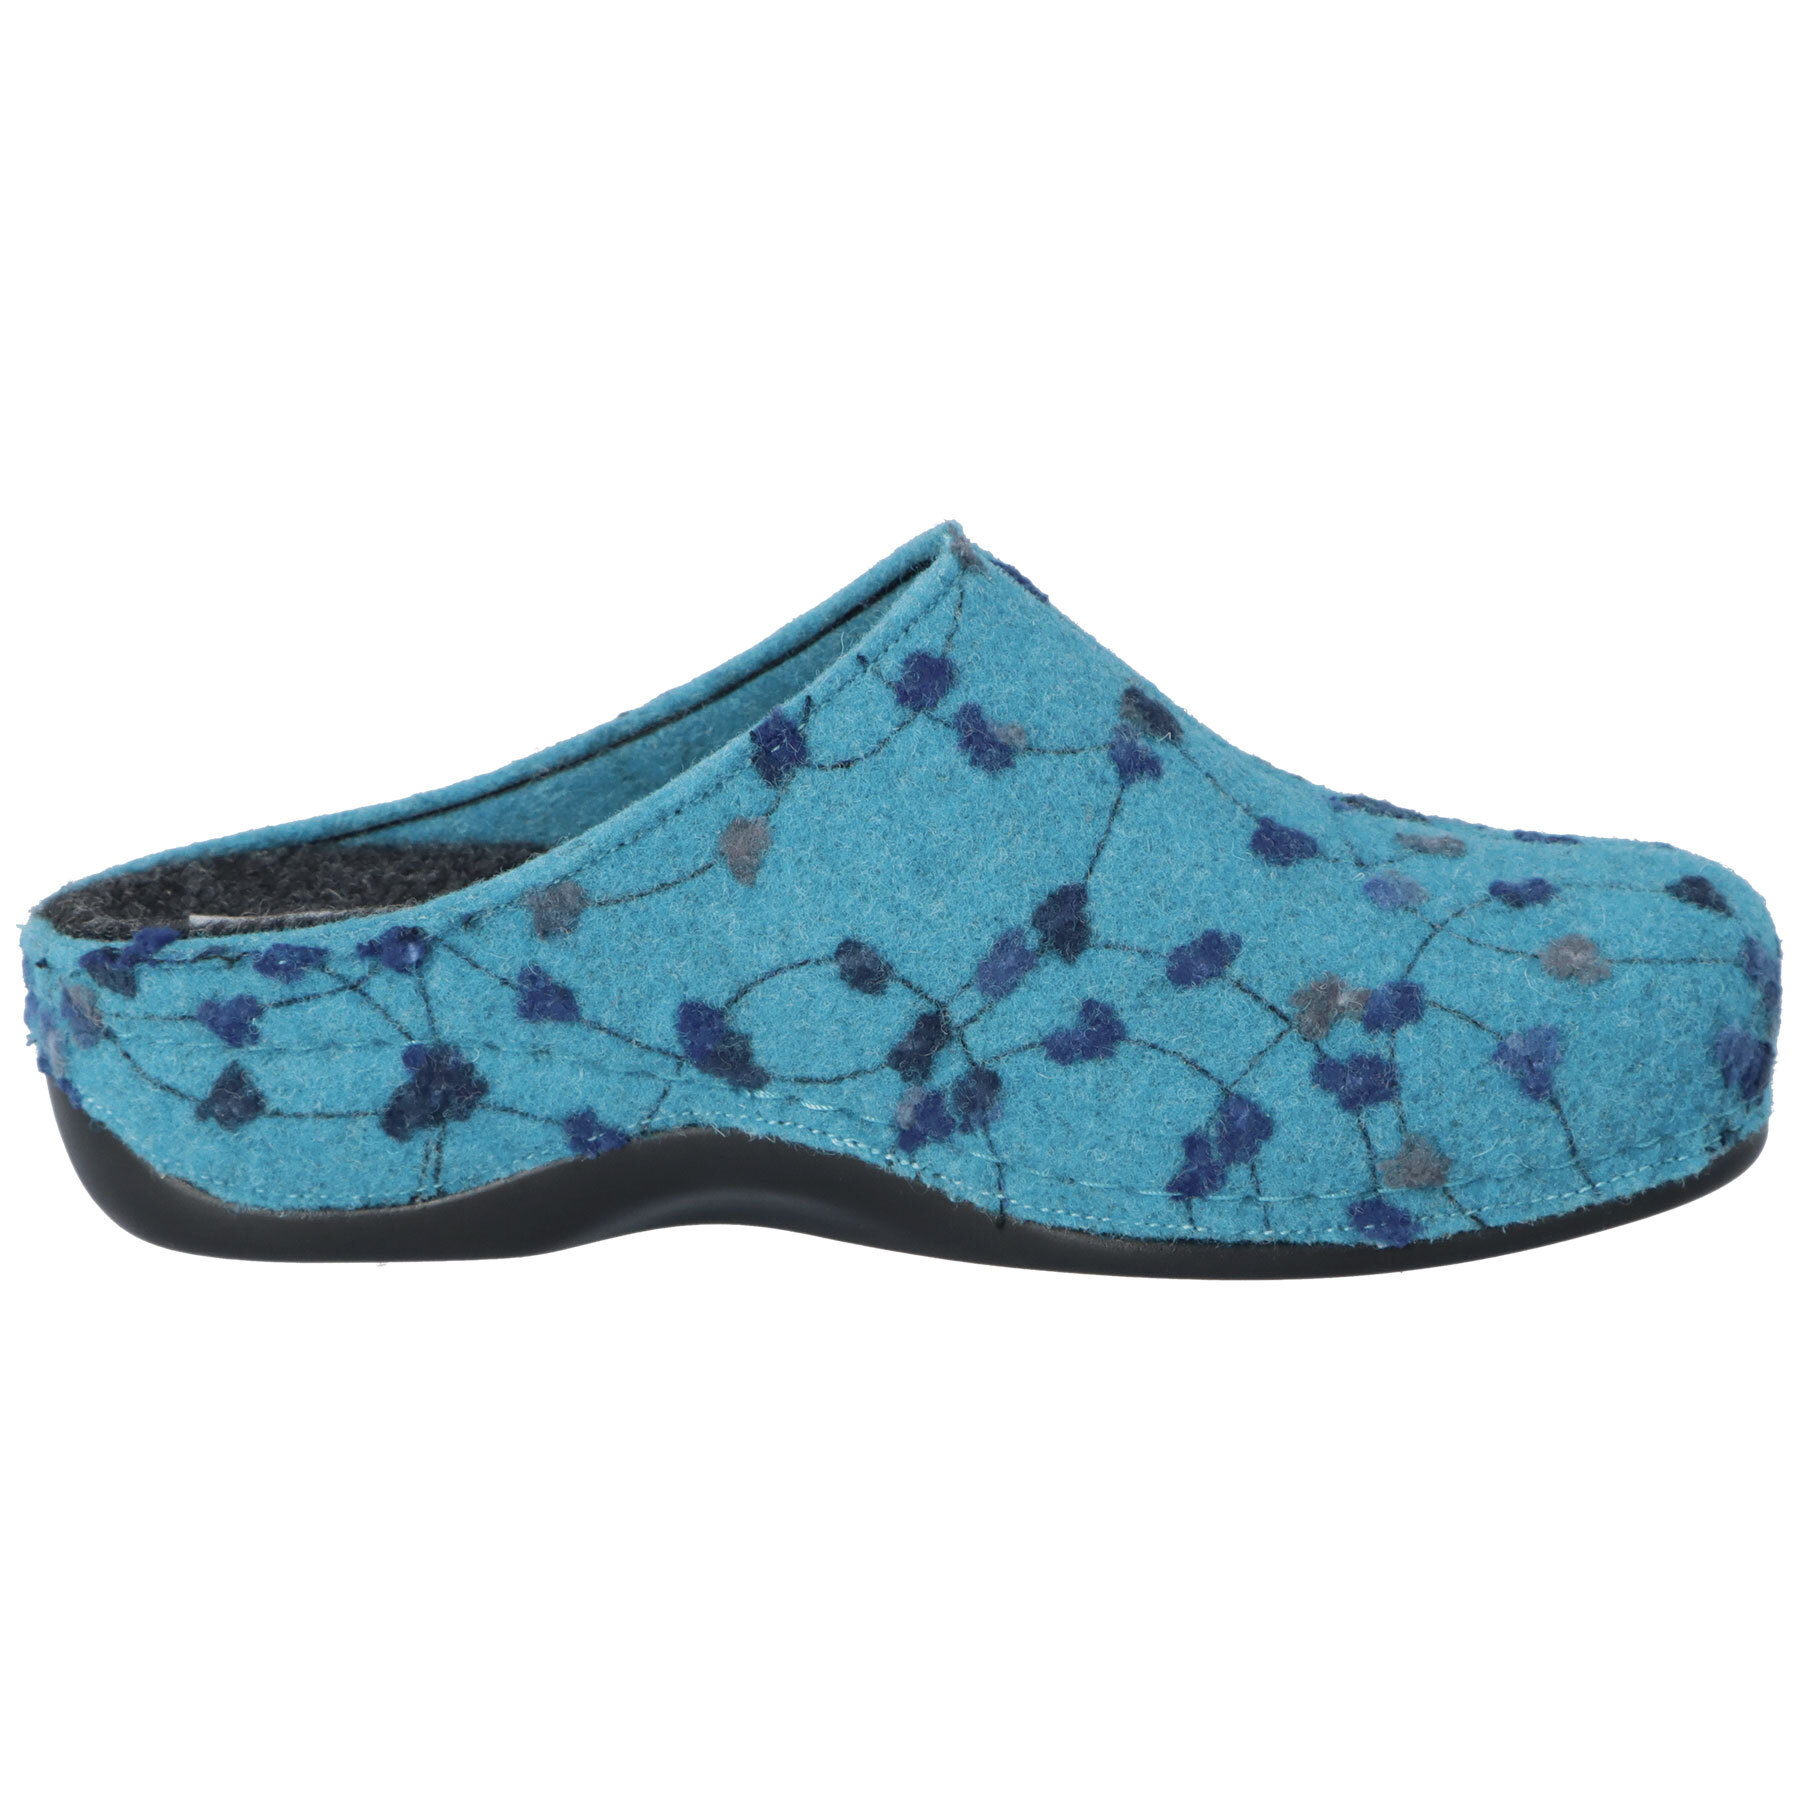 Health shoe Donata, turquoise blue